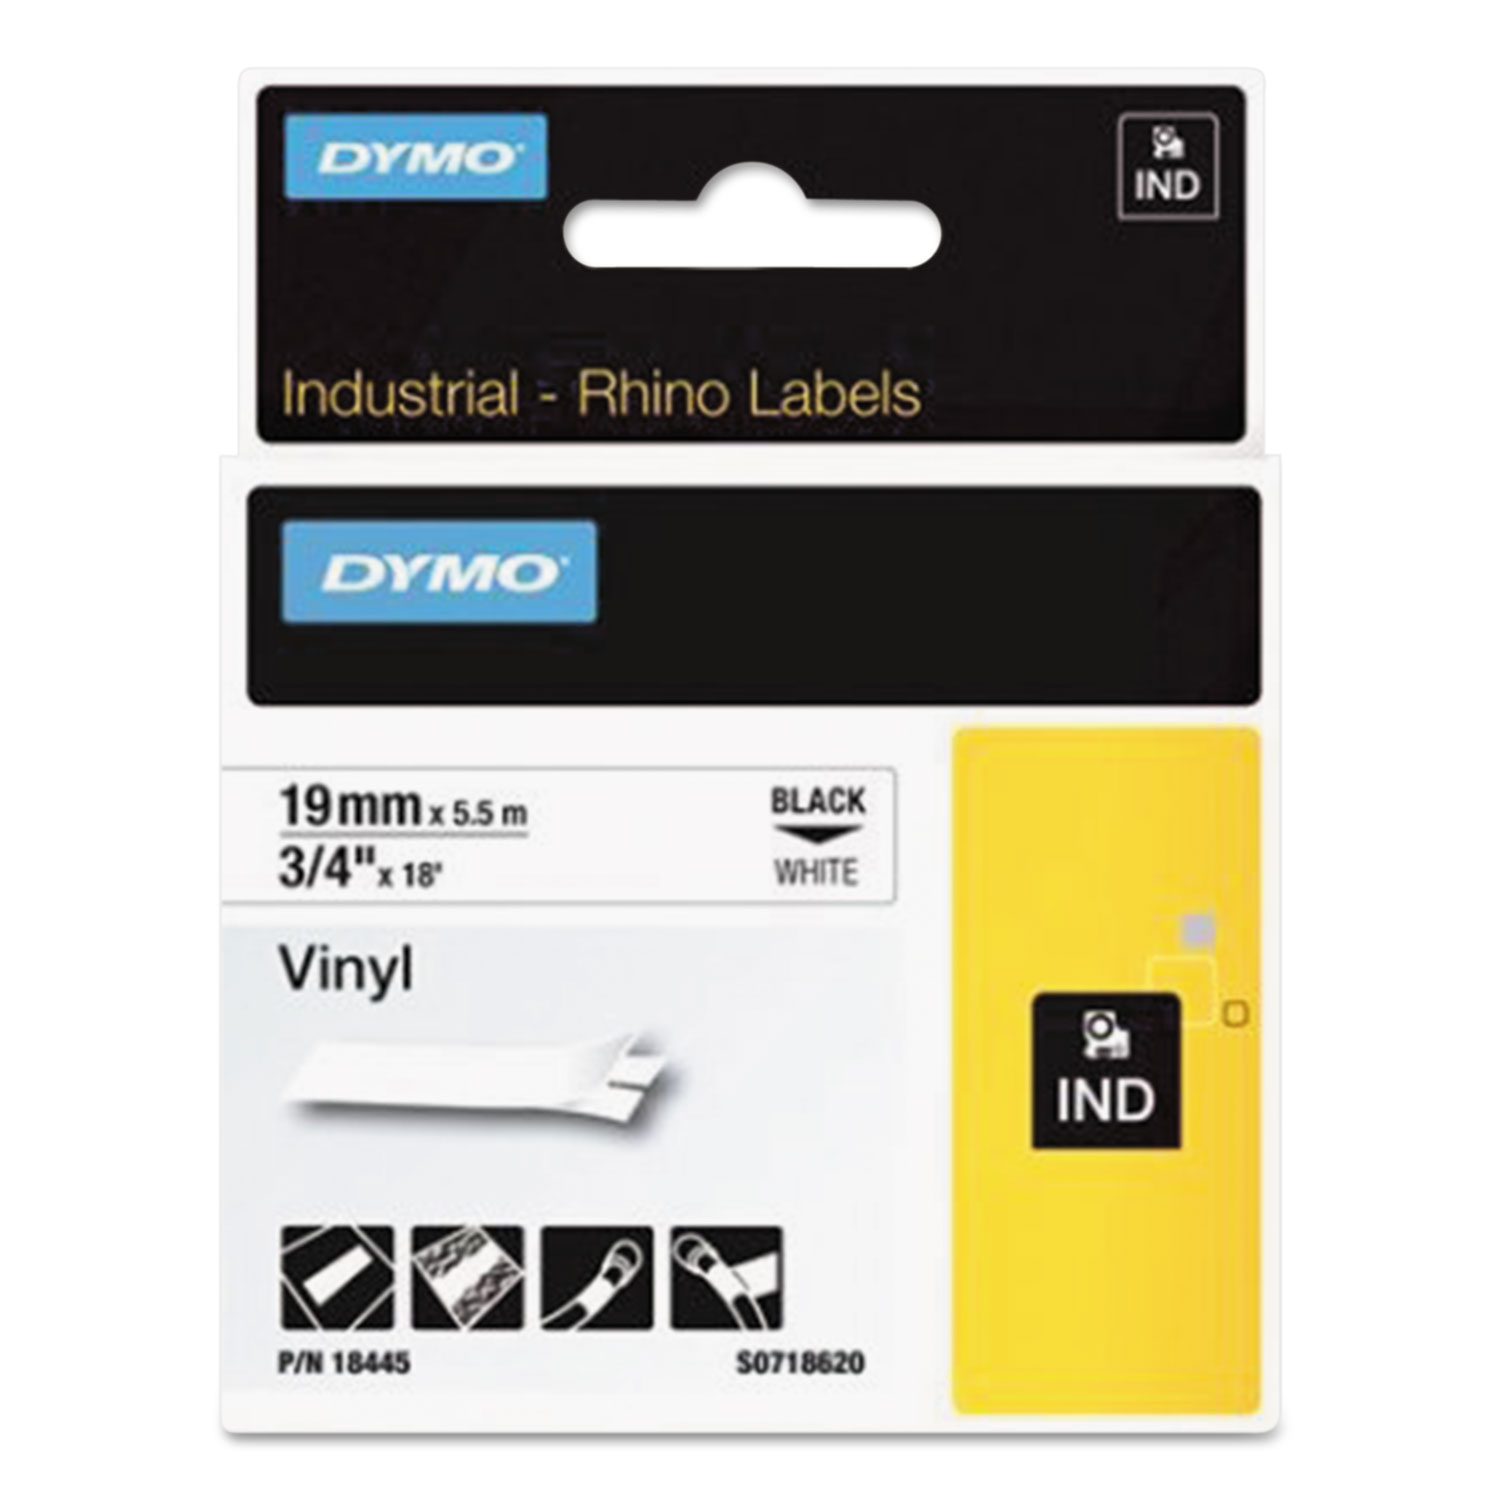  DYMO 18445 Rhino Permanent Vinyl Industrial Label Tape, 0.75 x 18 ft, White/Black Print (DYM18445) 